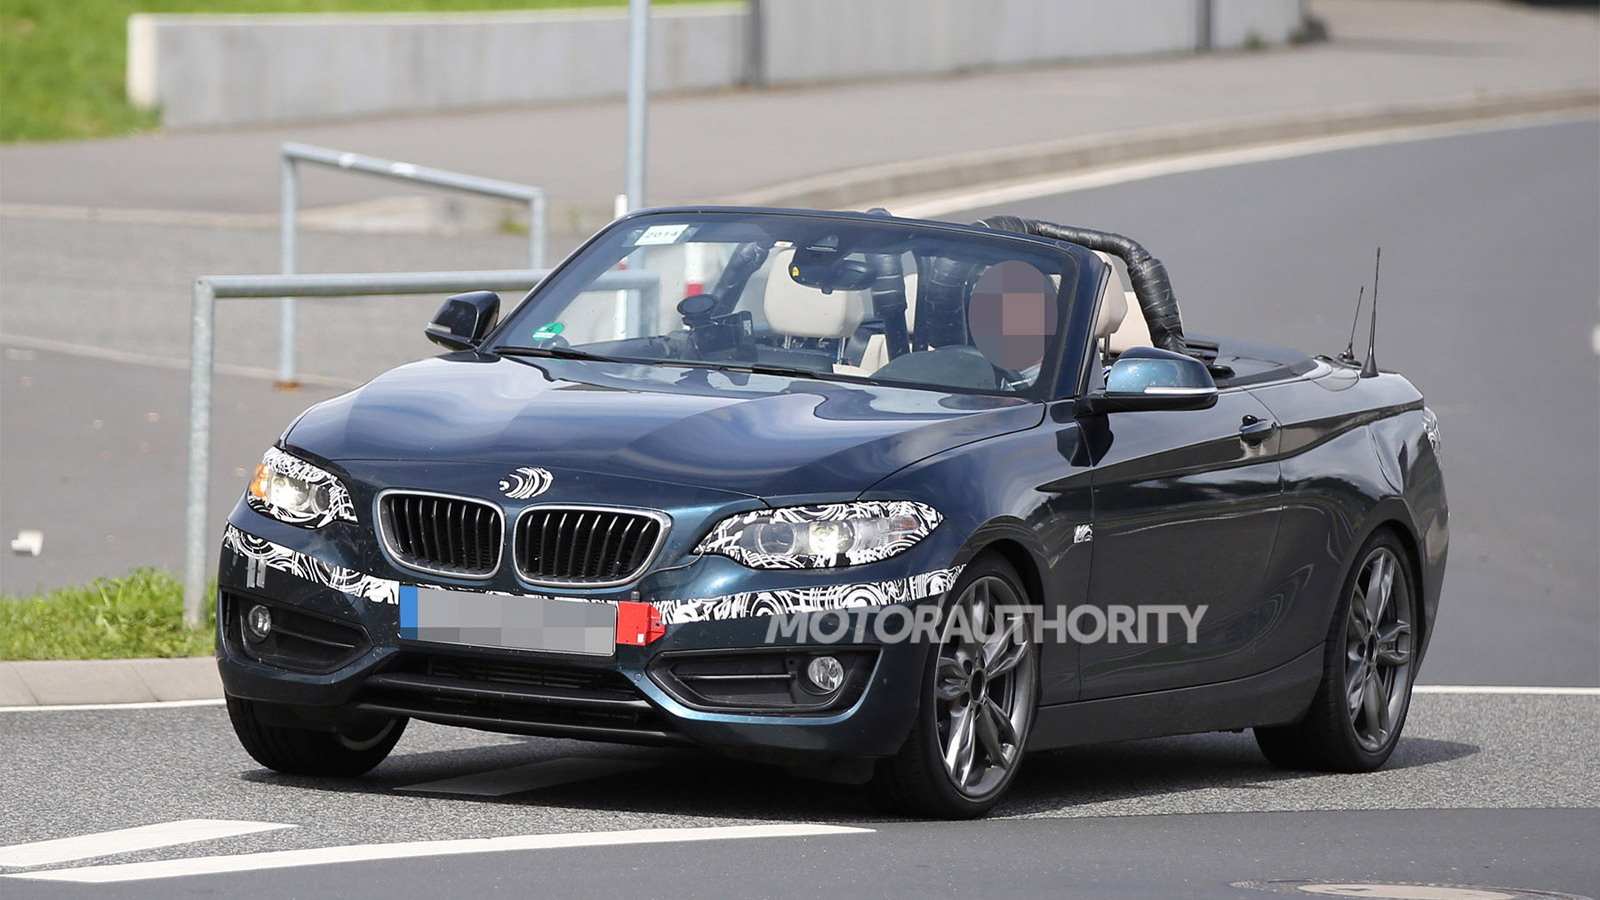 2015 BMW 2-Series Convertible spy shots